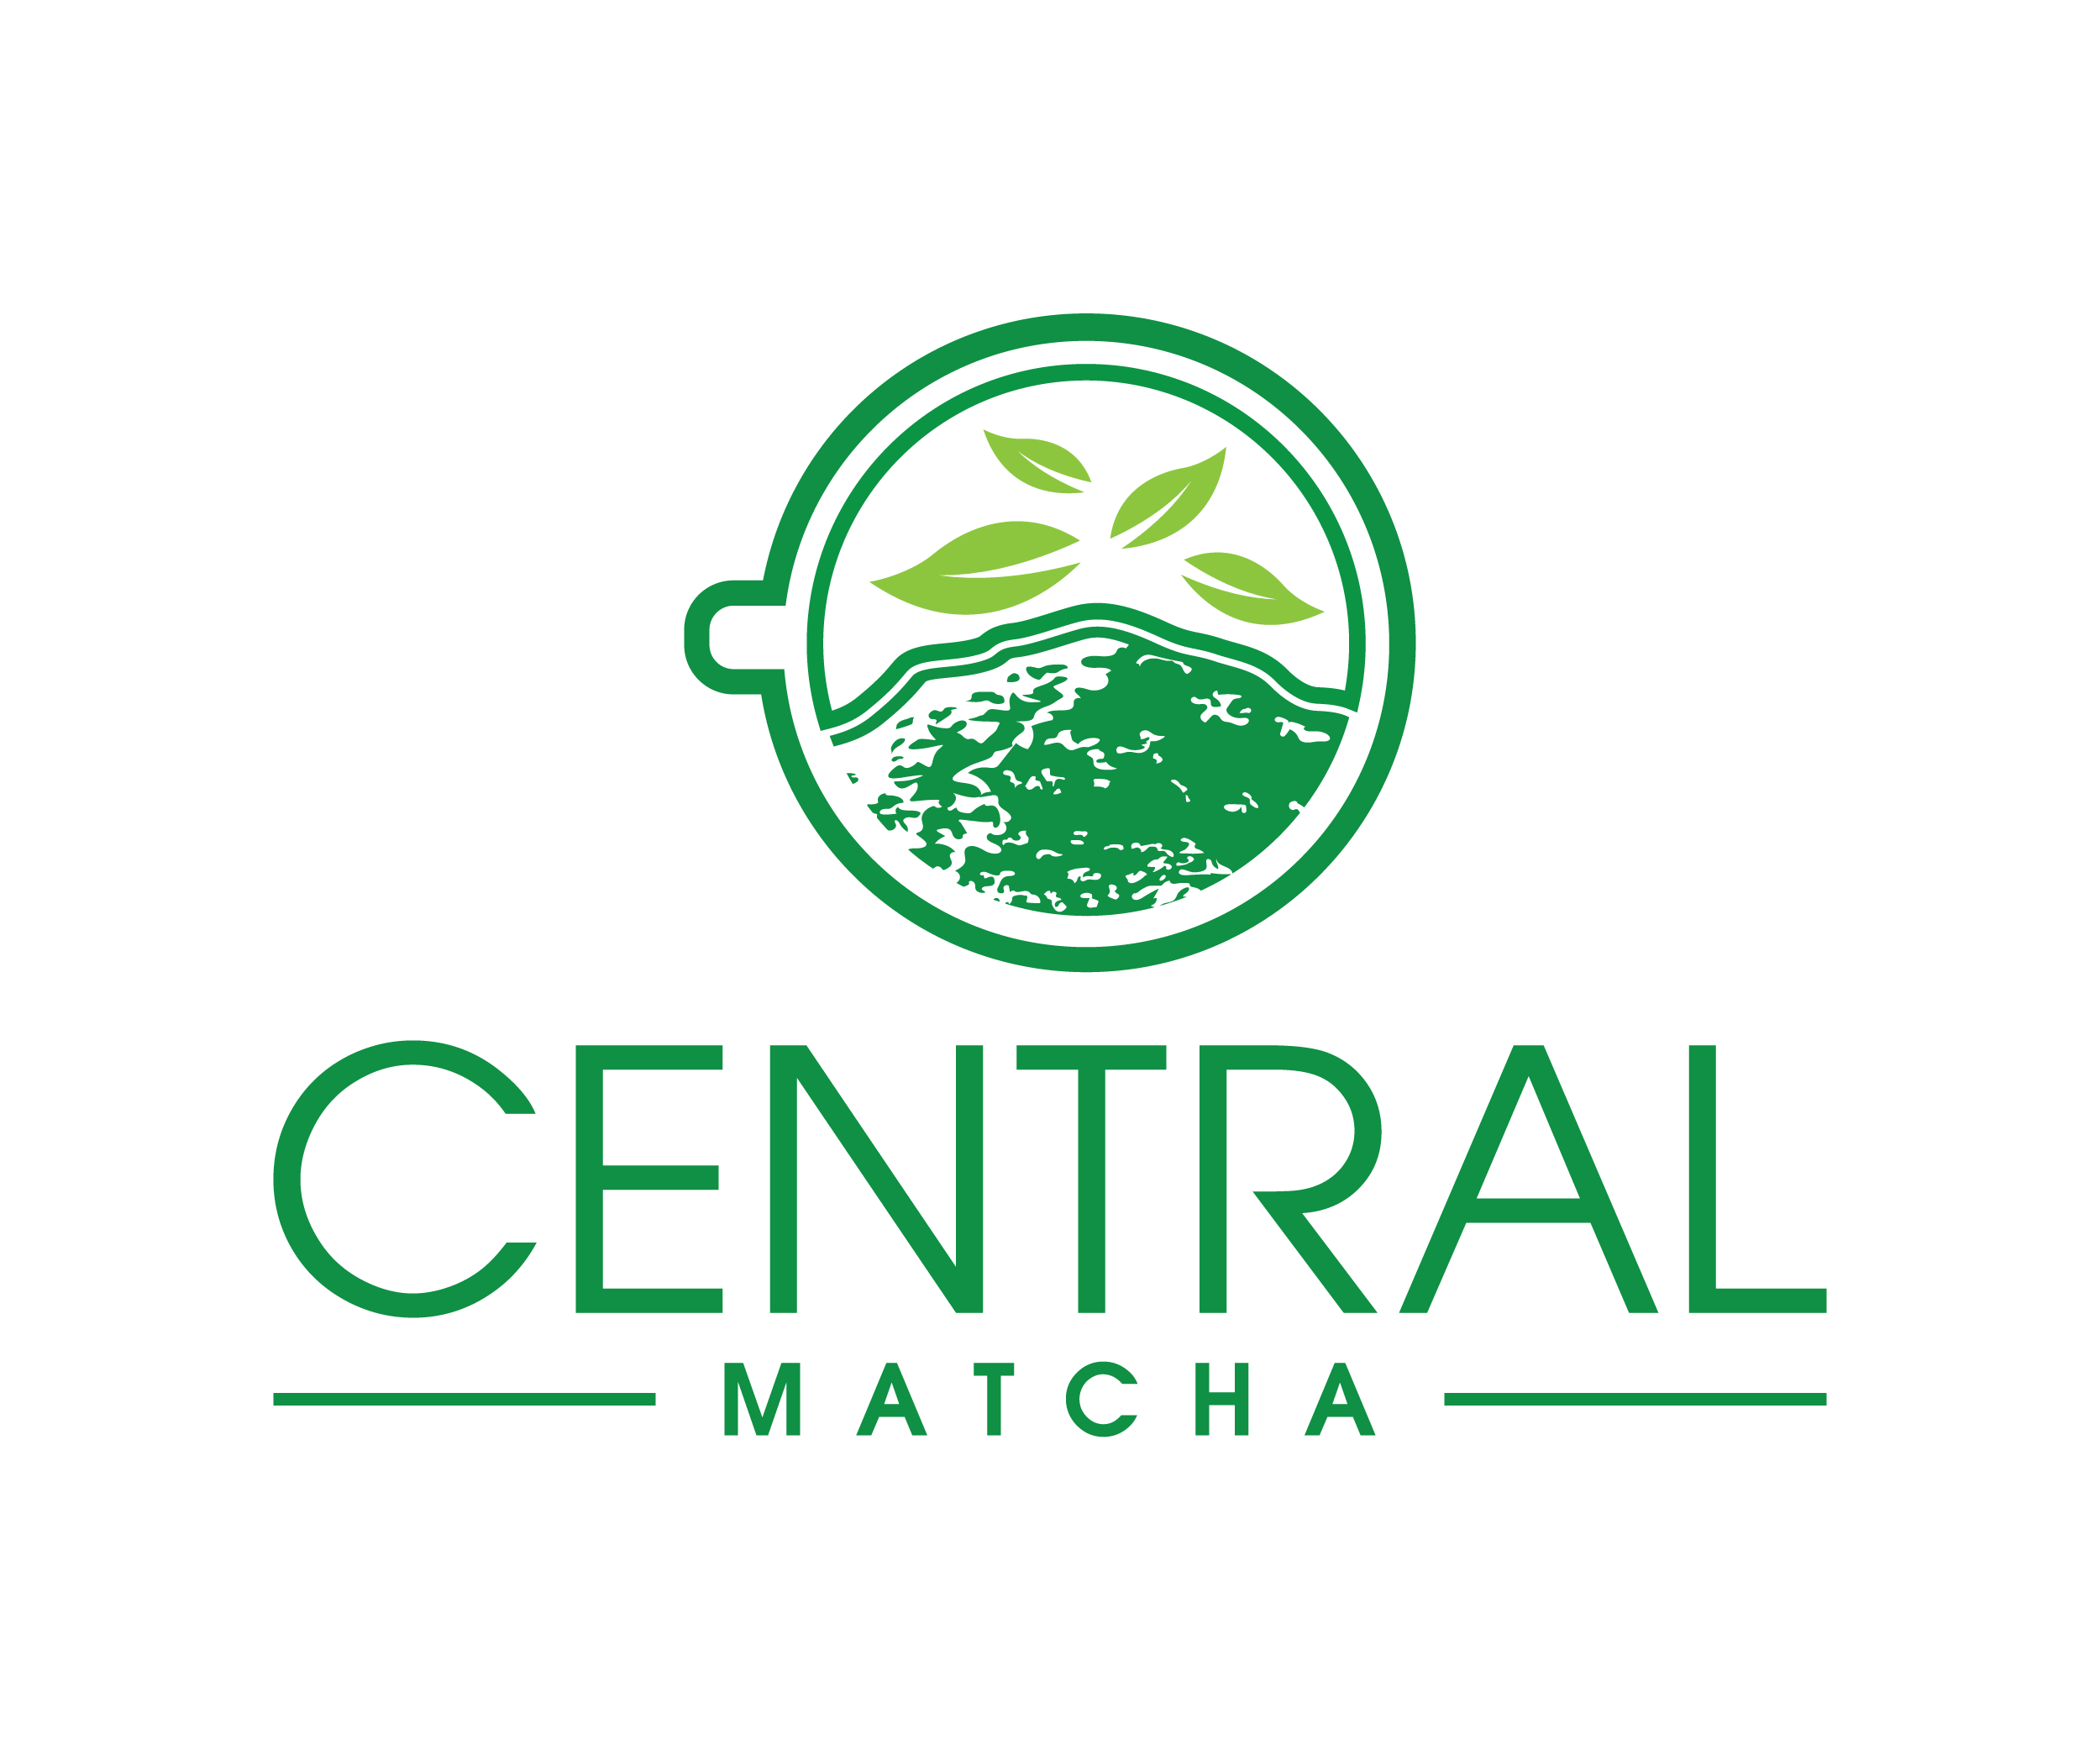 Central Matcha